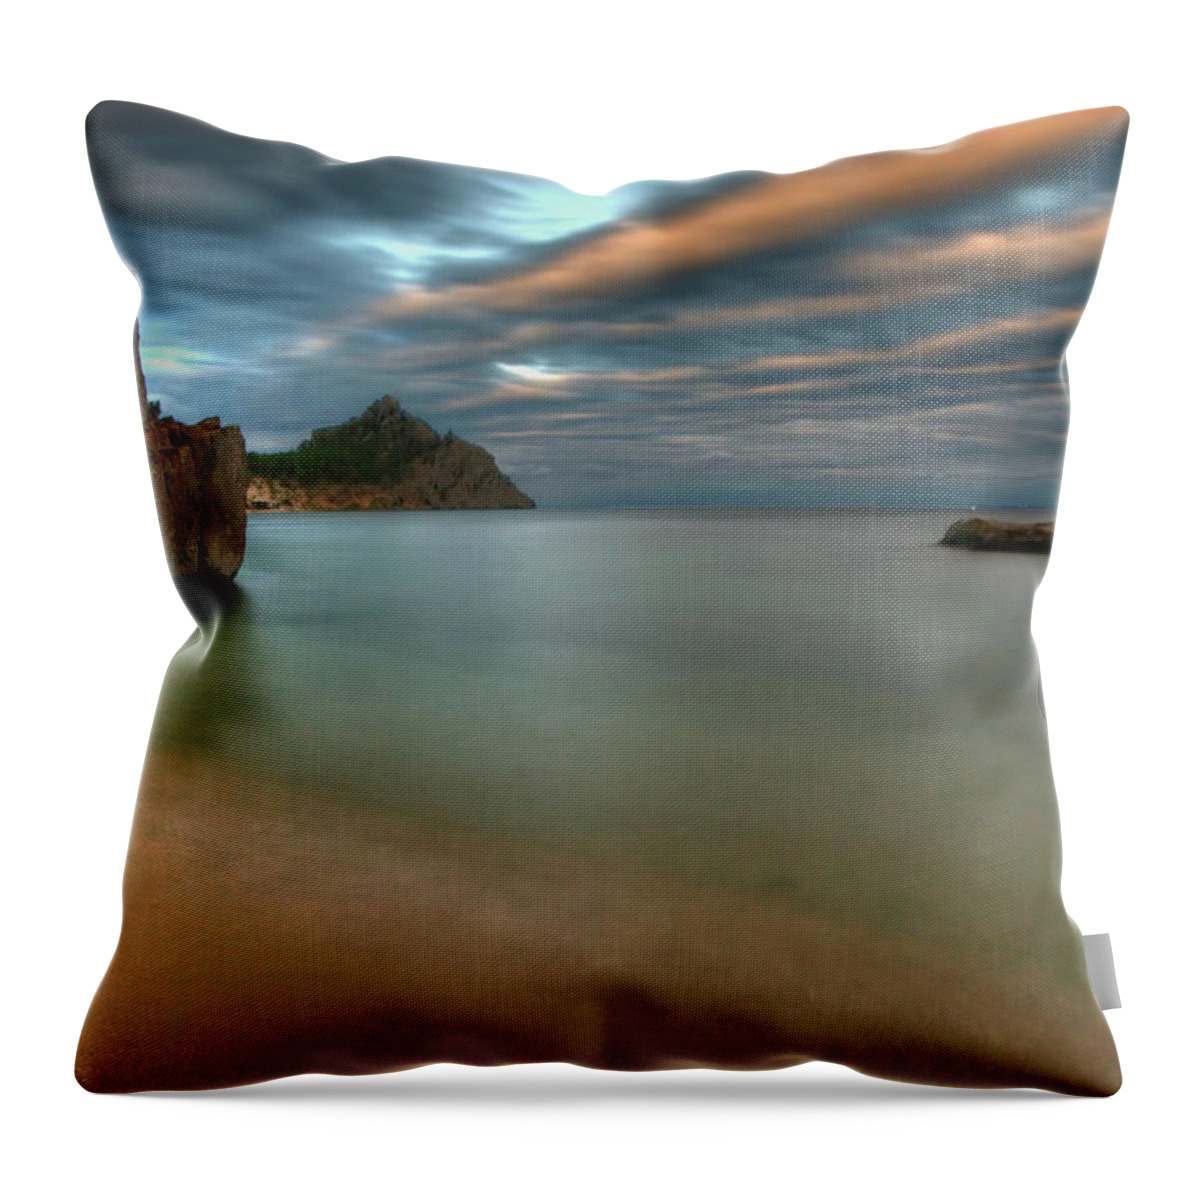 Scenics Throw Pillow featuring the photograph Dusk At Peschanaya Bay by Photo ©tan Yilmaz